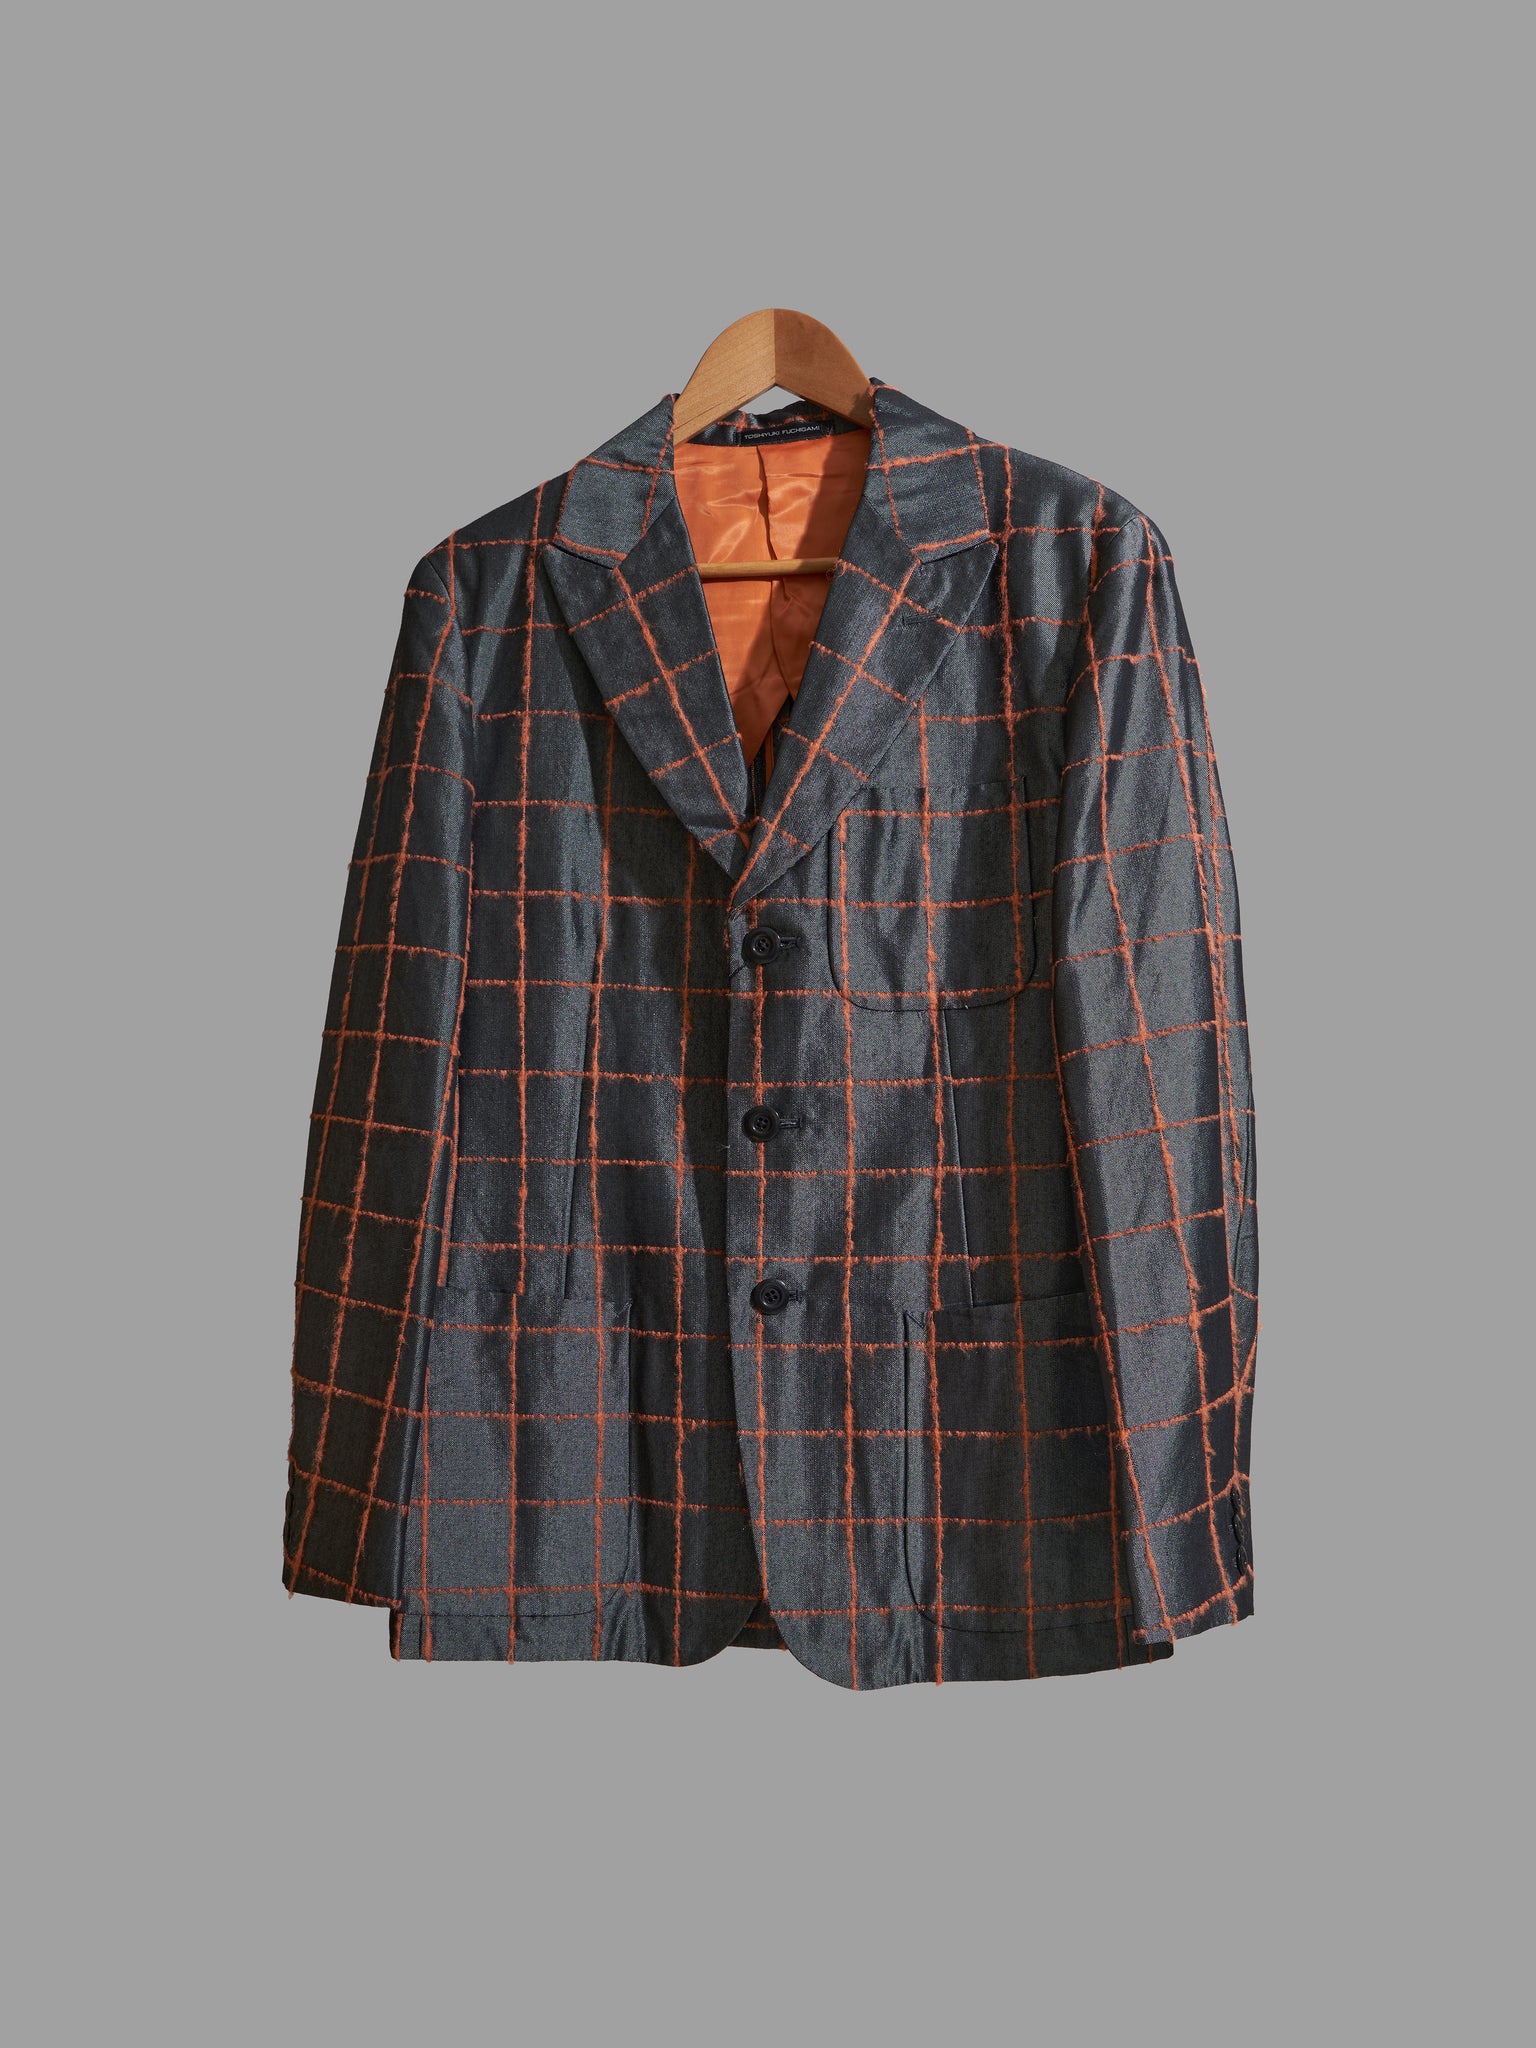 Toshiyuki Fuchigami glossy grey blazer with fluorescent orange check - size 48